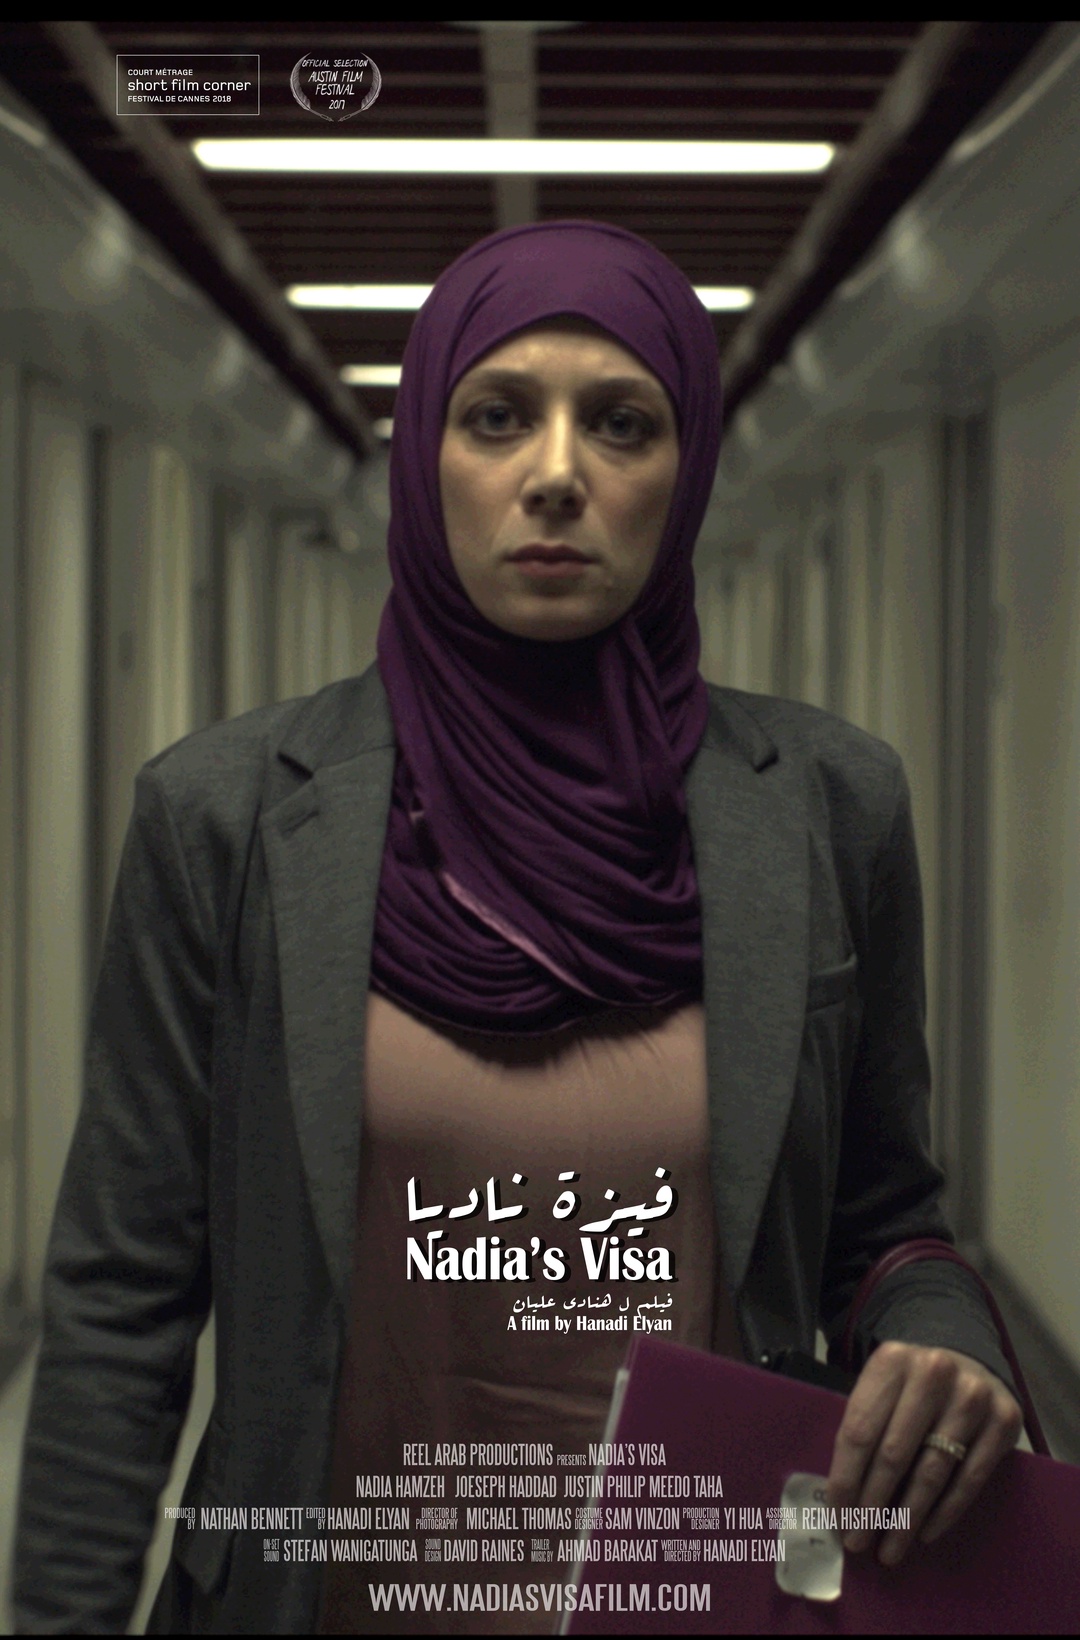 Nadia's Visa